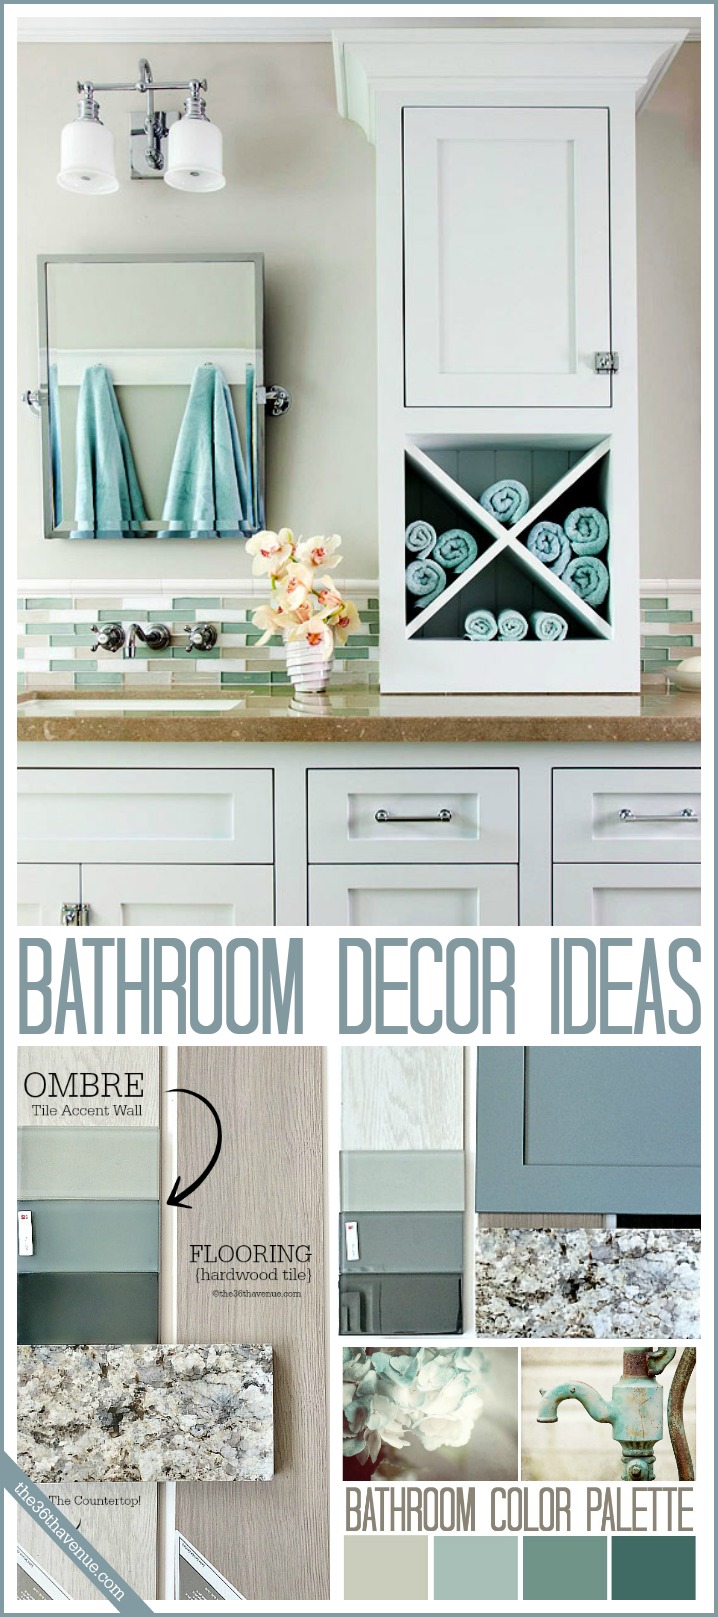 Bathroom Decor Ideas and Design Tips at the36thavenue.com #home